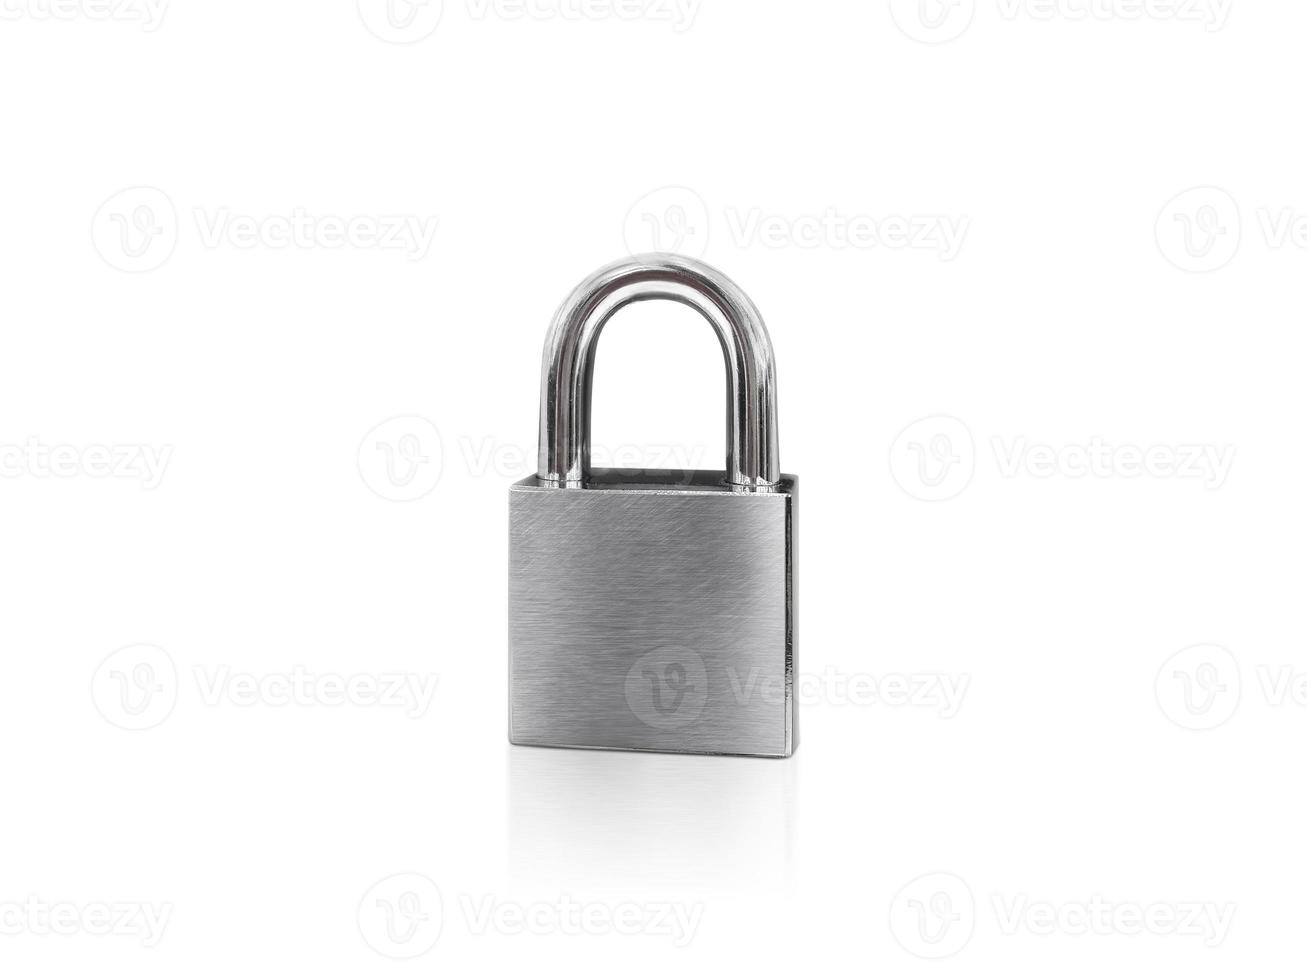 Locked Silver Padlock on a white background photo